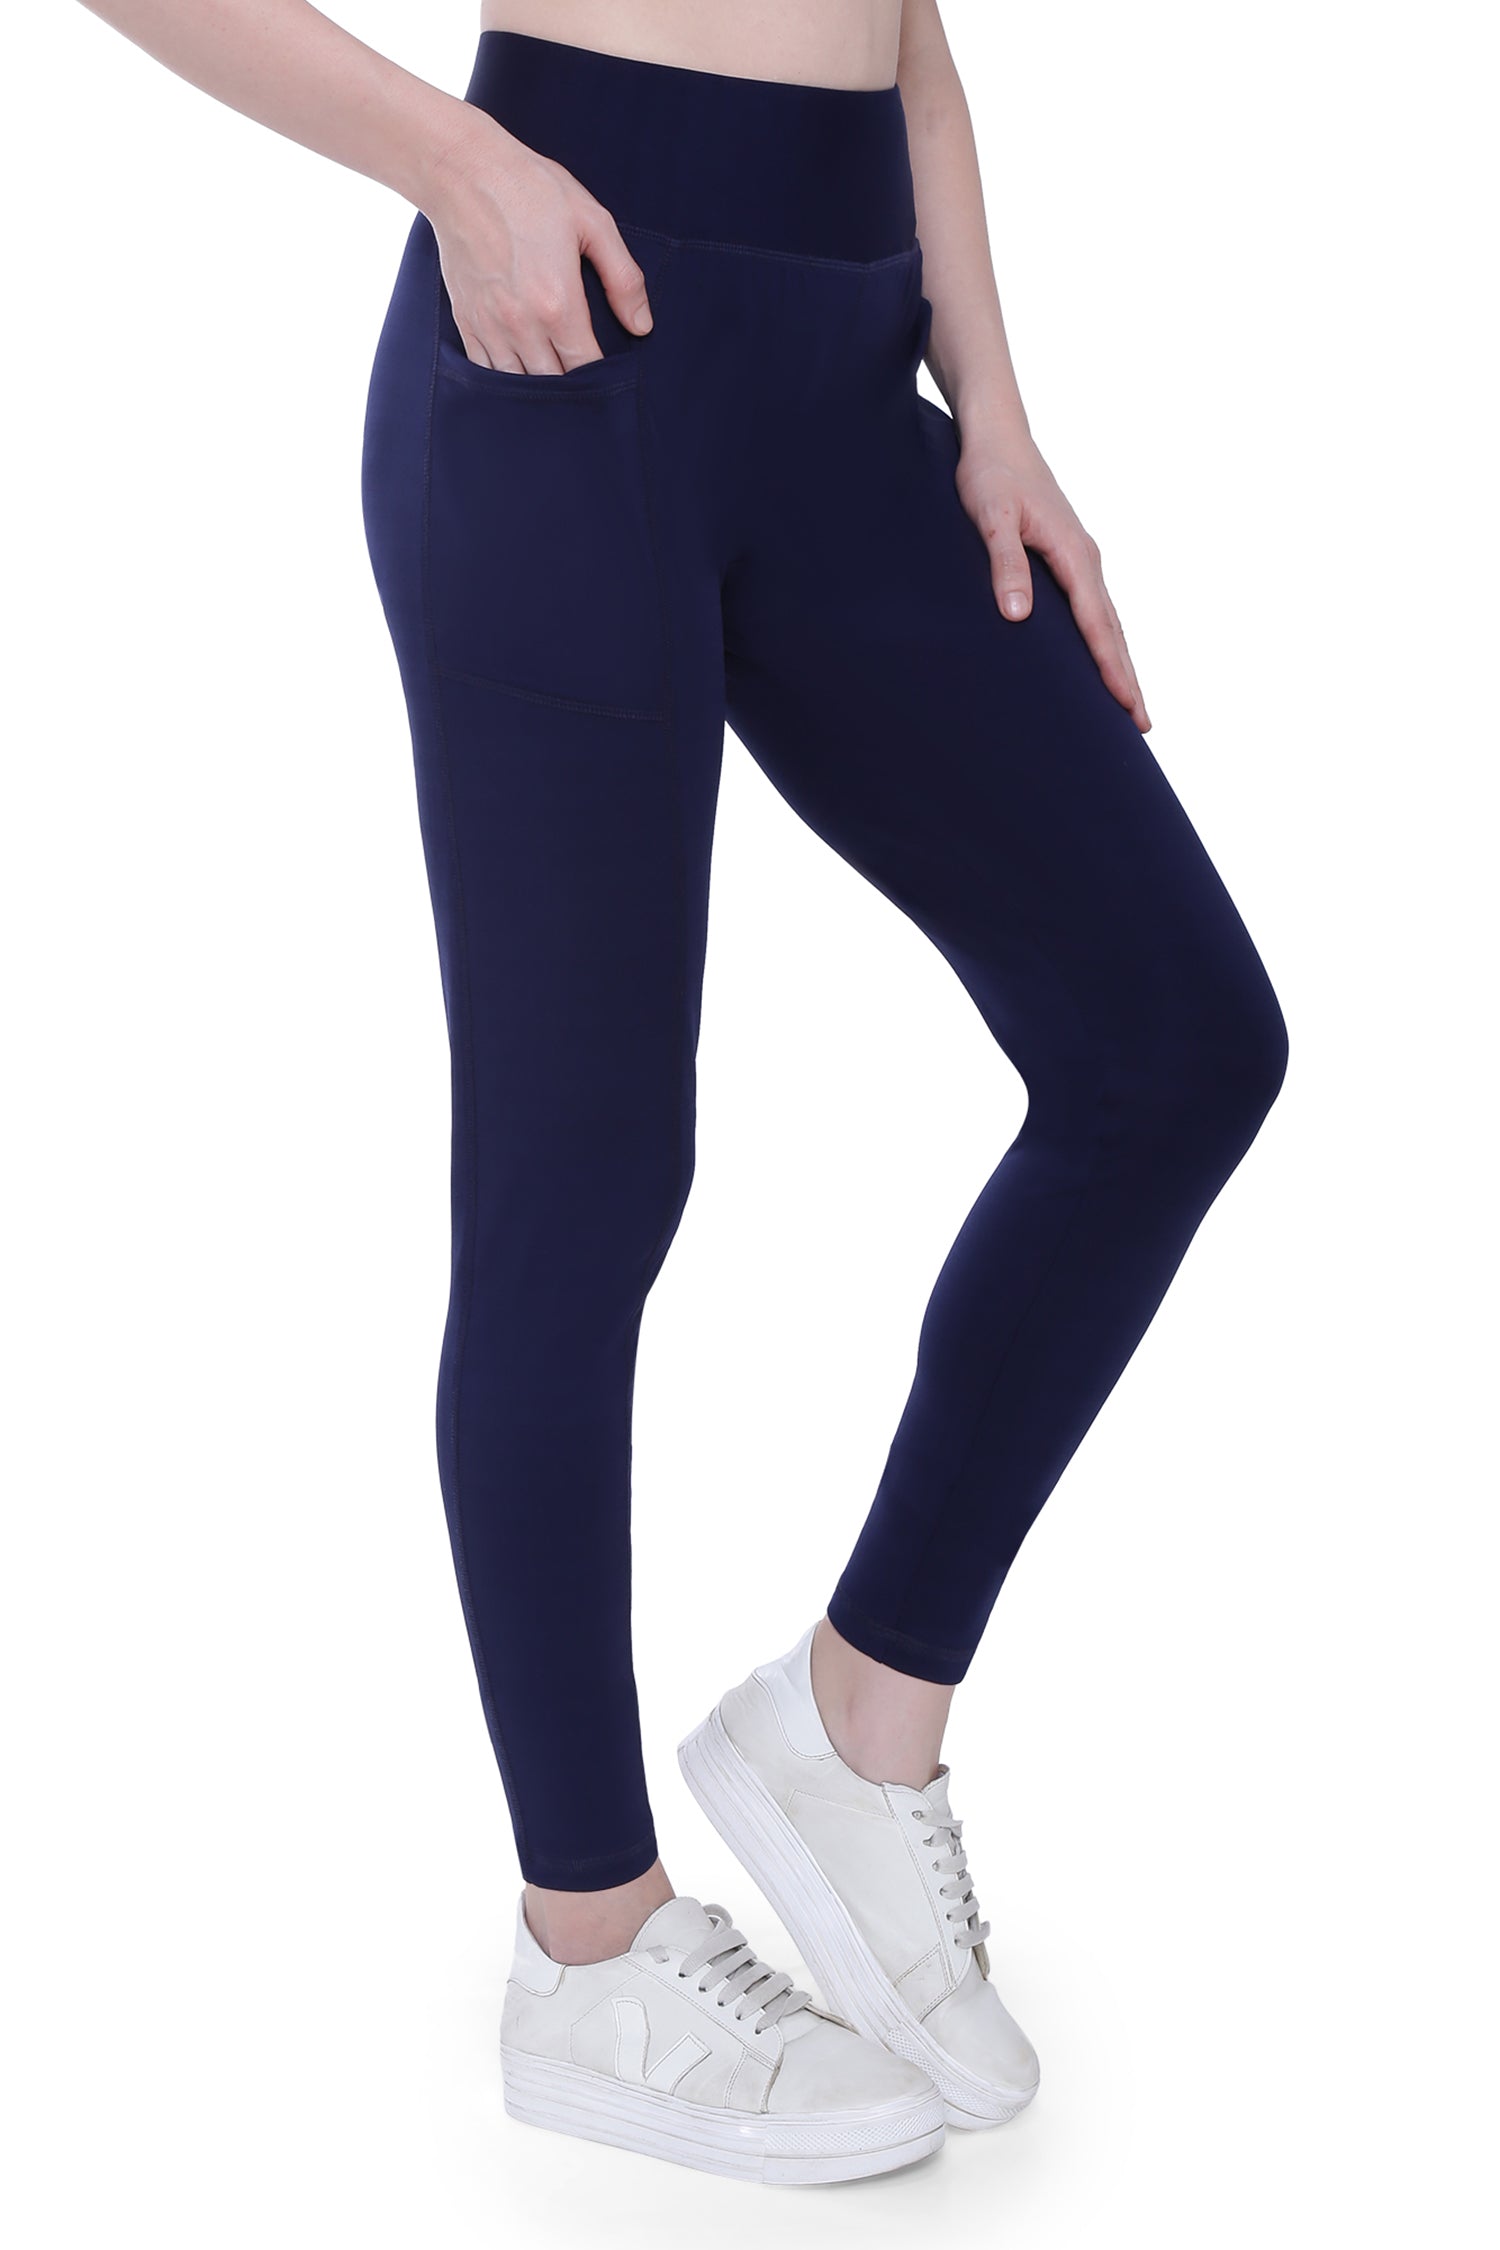 TRASA Active Yoga Pants for Women's Gym High Waist with 3 Pockets- Nav –